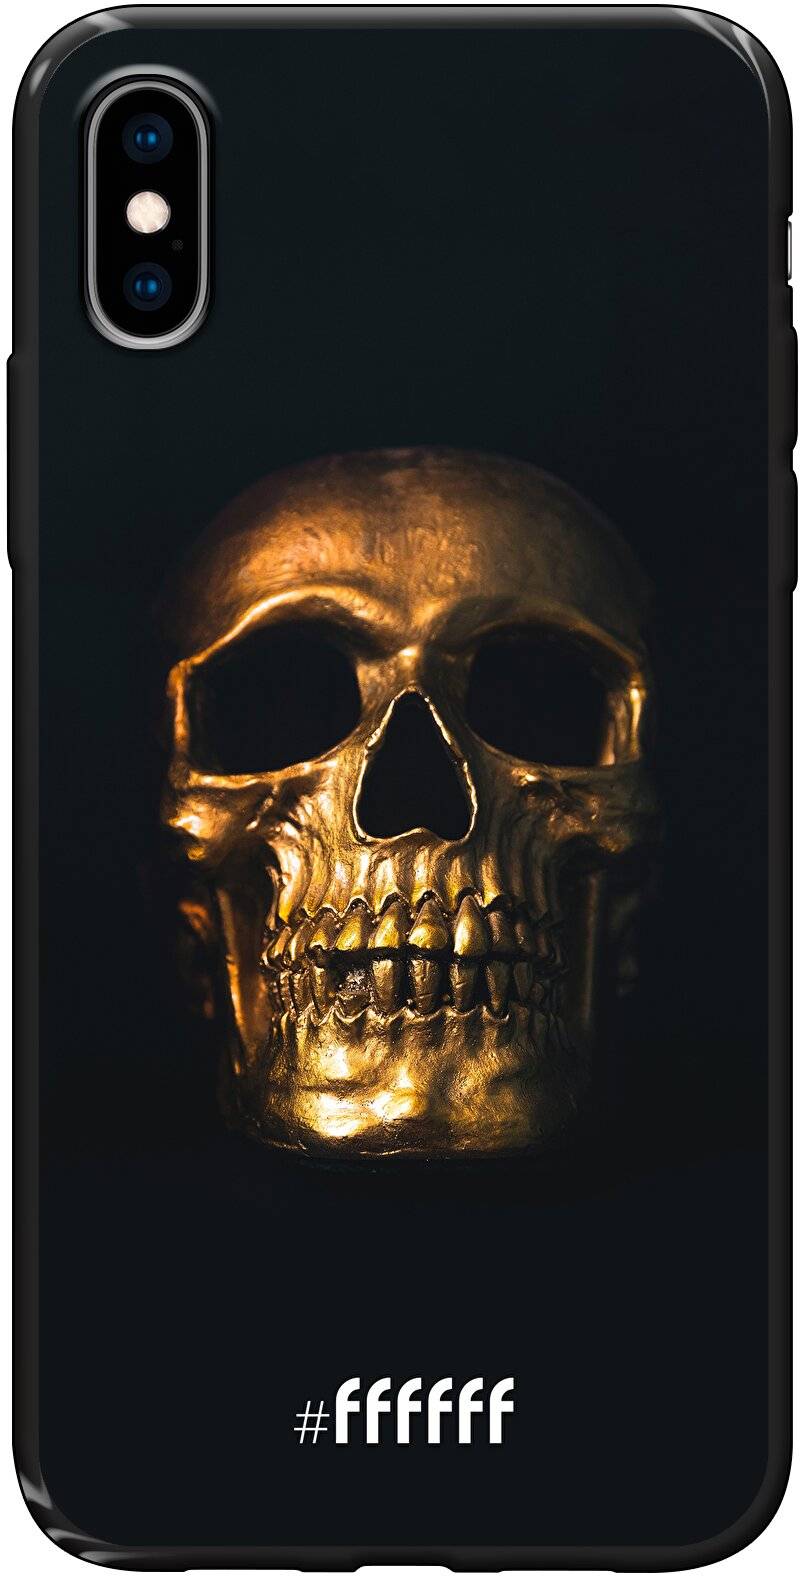 Gold Skull iPhone X